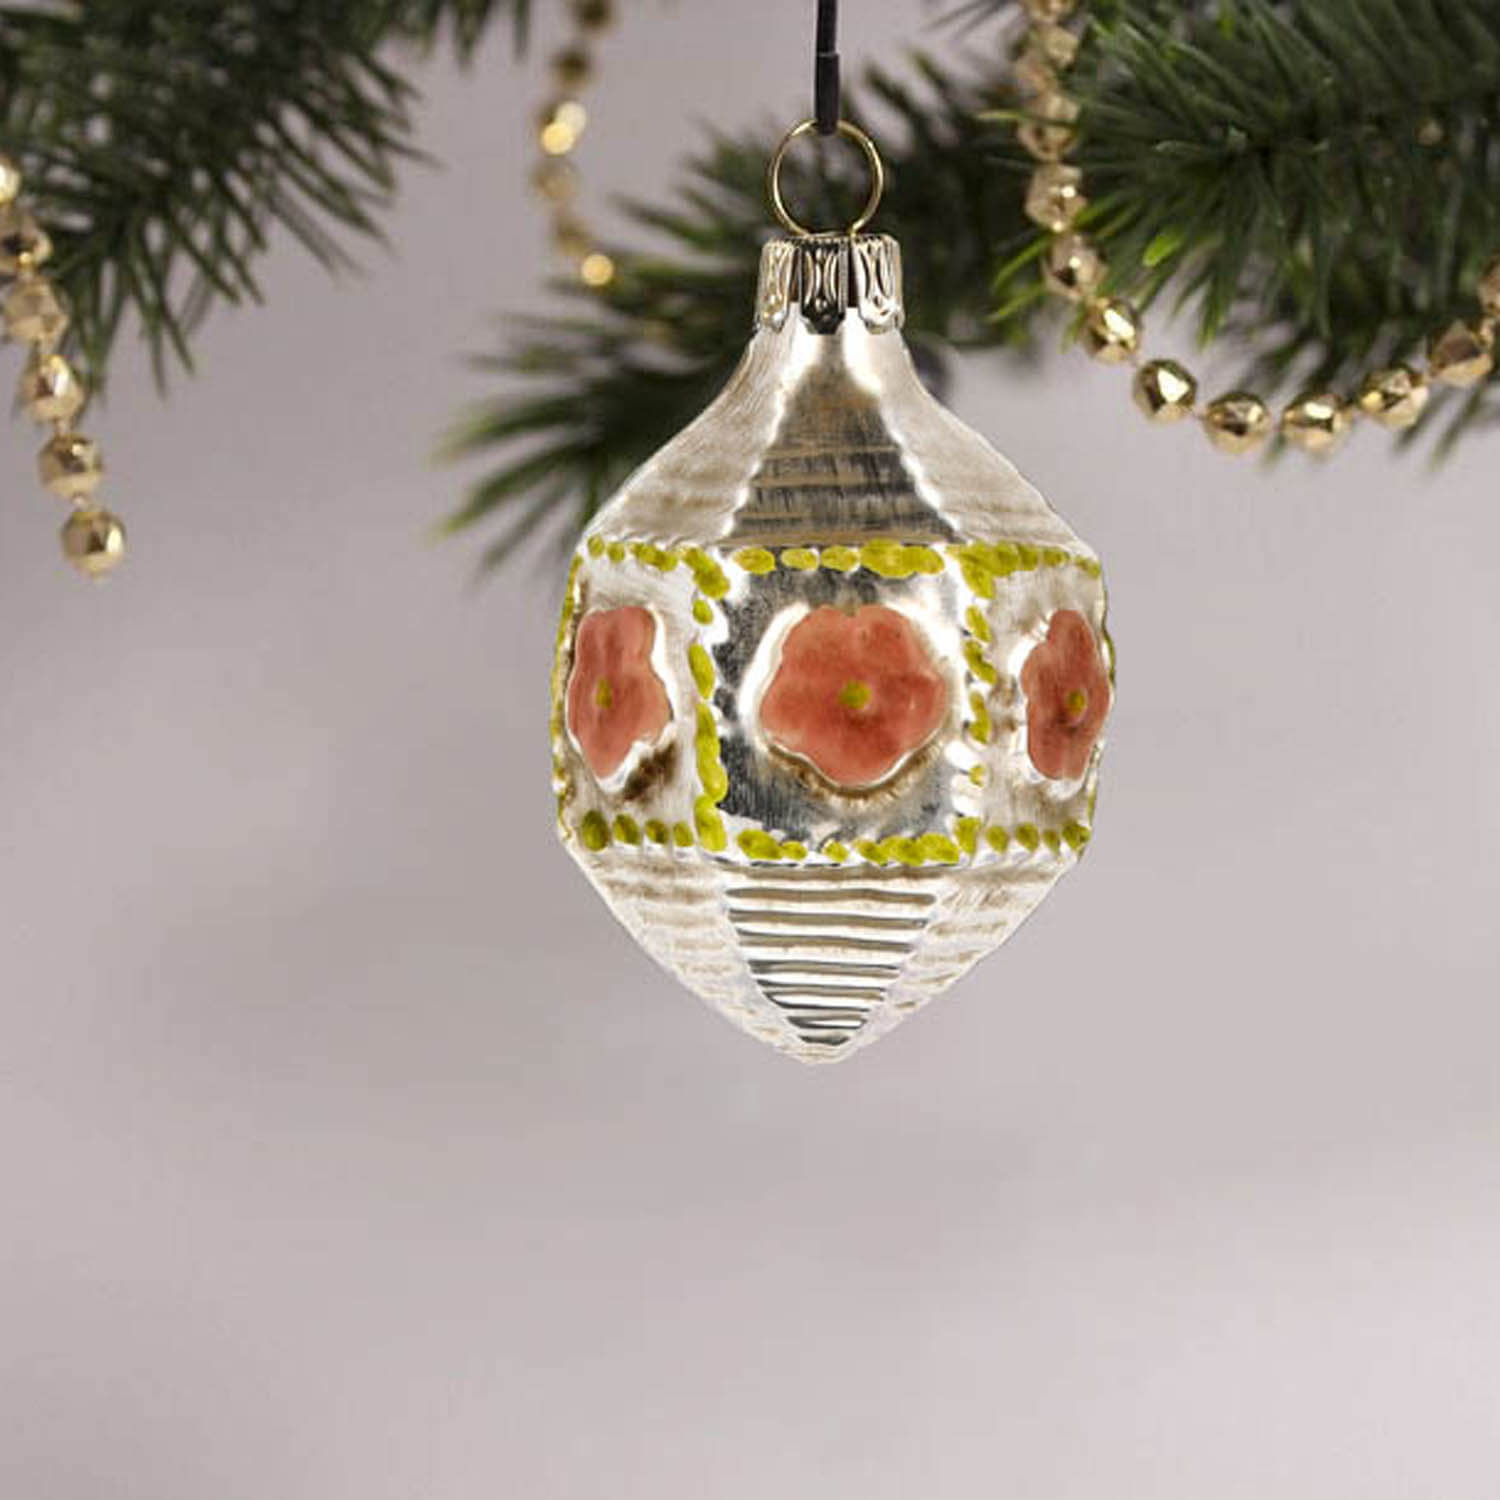 MAROLIN® - Miniature glass ornament "Hexagon rose"